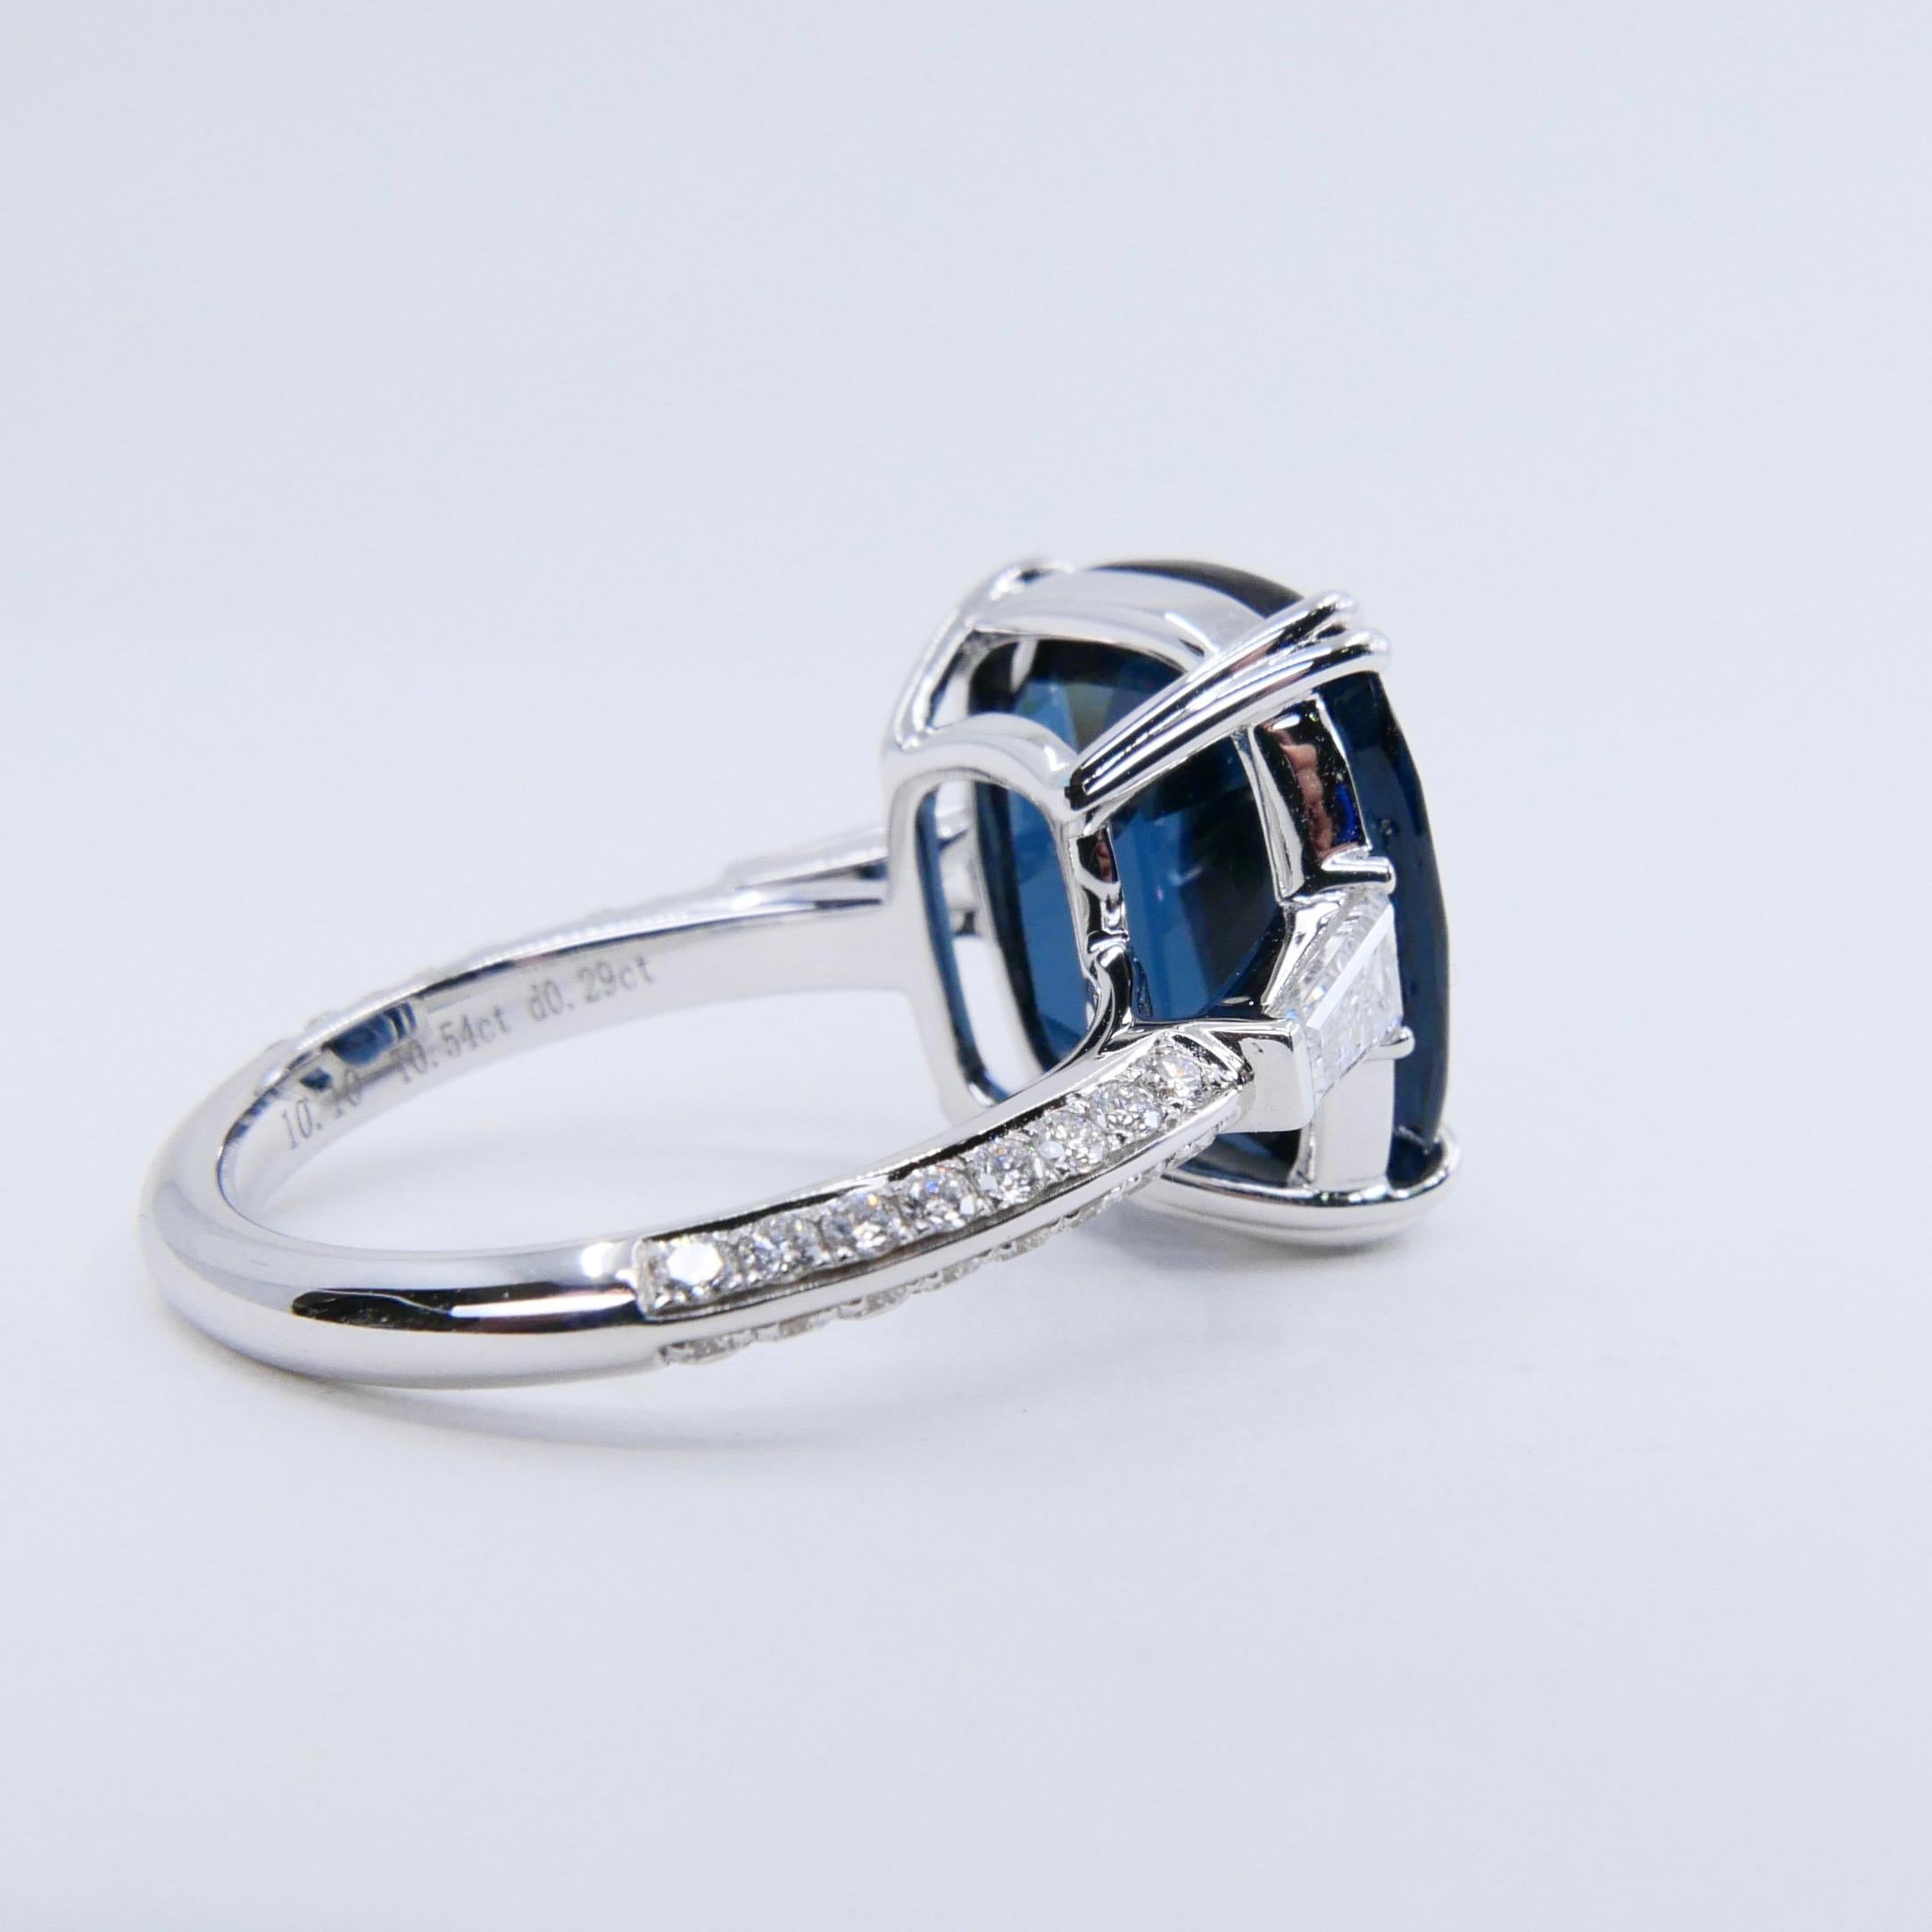 Women's Important Certified 10.10 Carat Cobalt Spinel Diamond Cocktail Ring. Exquisite.